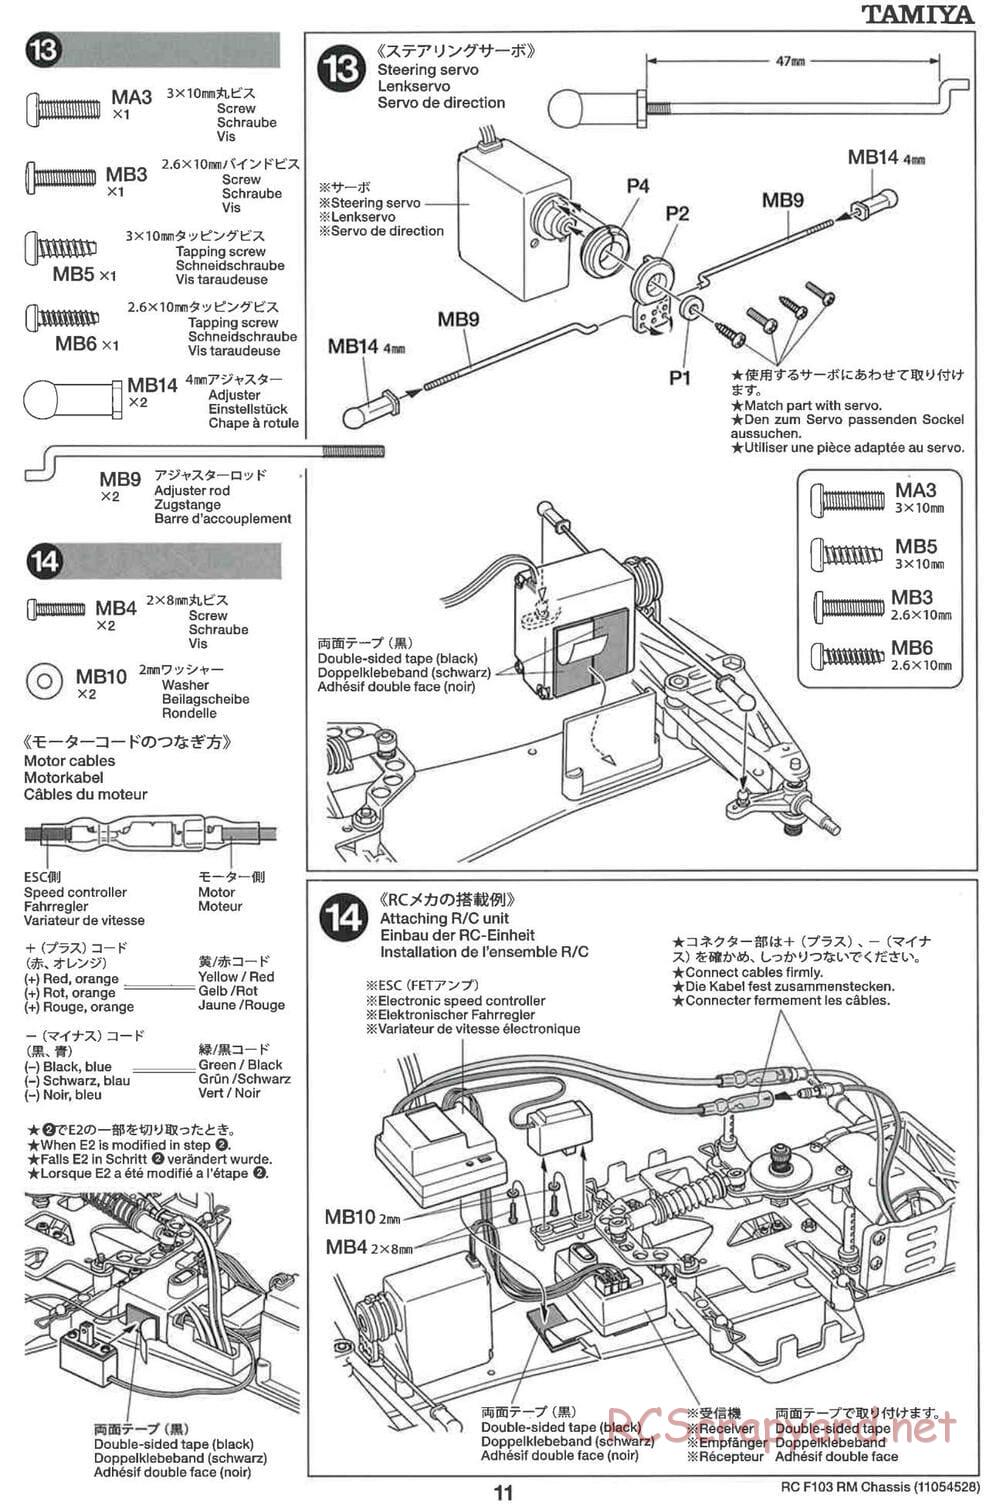 Tamiya - F103RM Chassis - Manual - Page 11